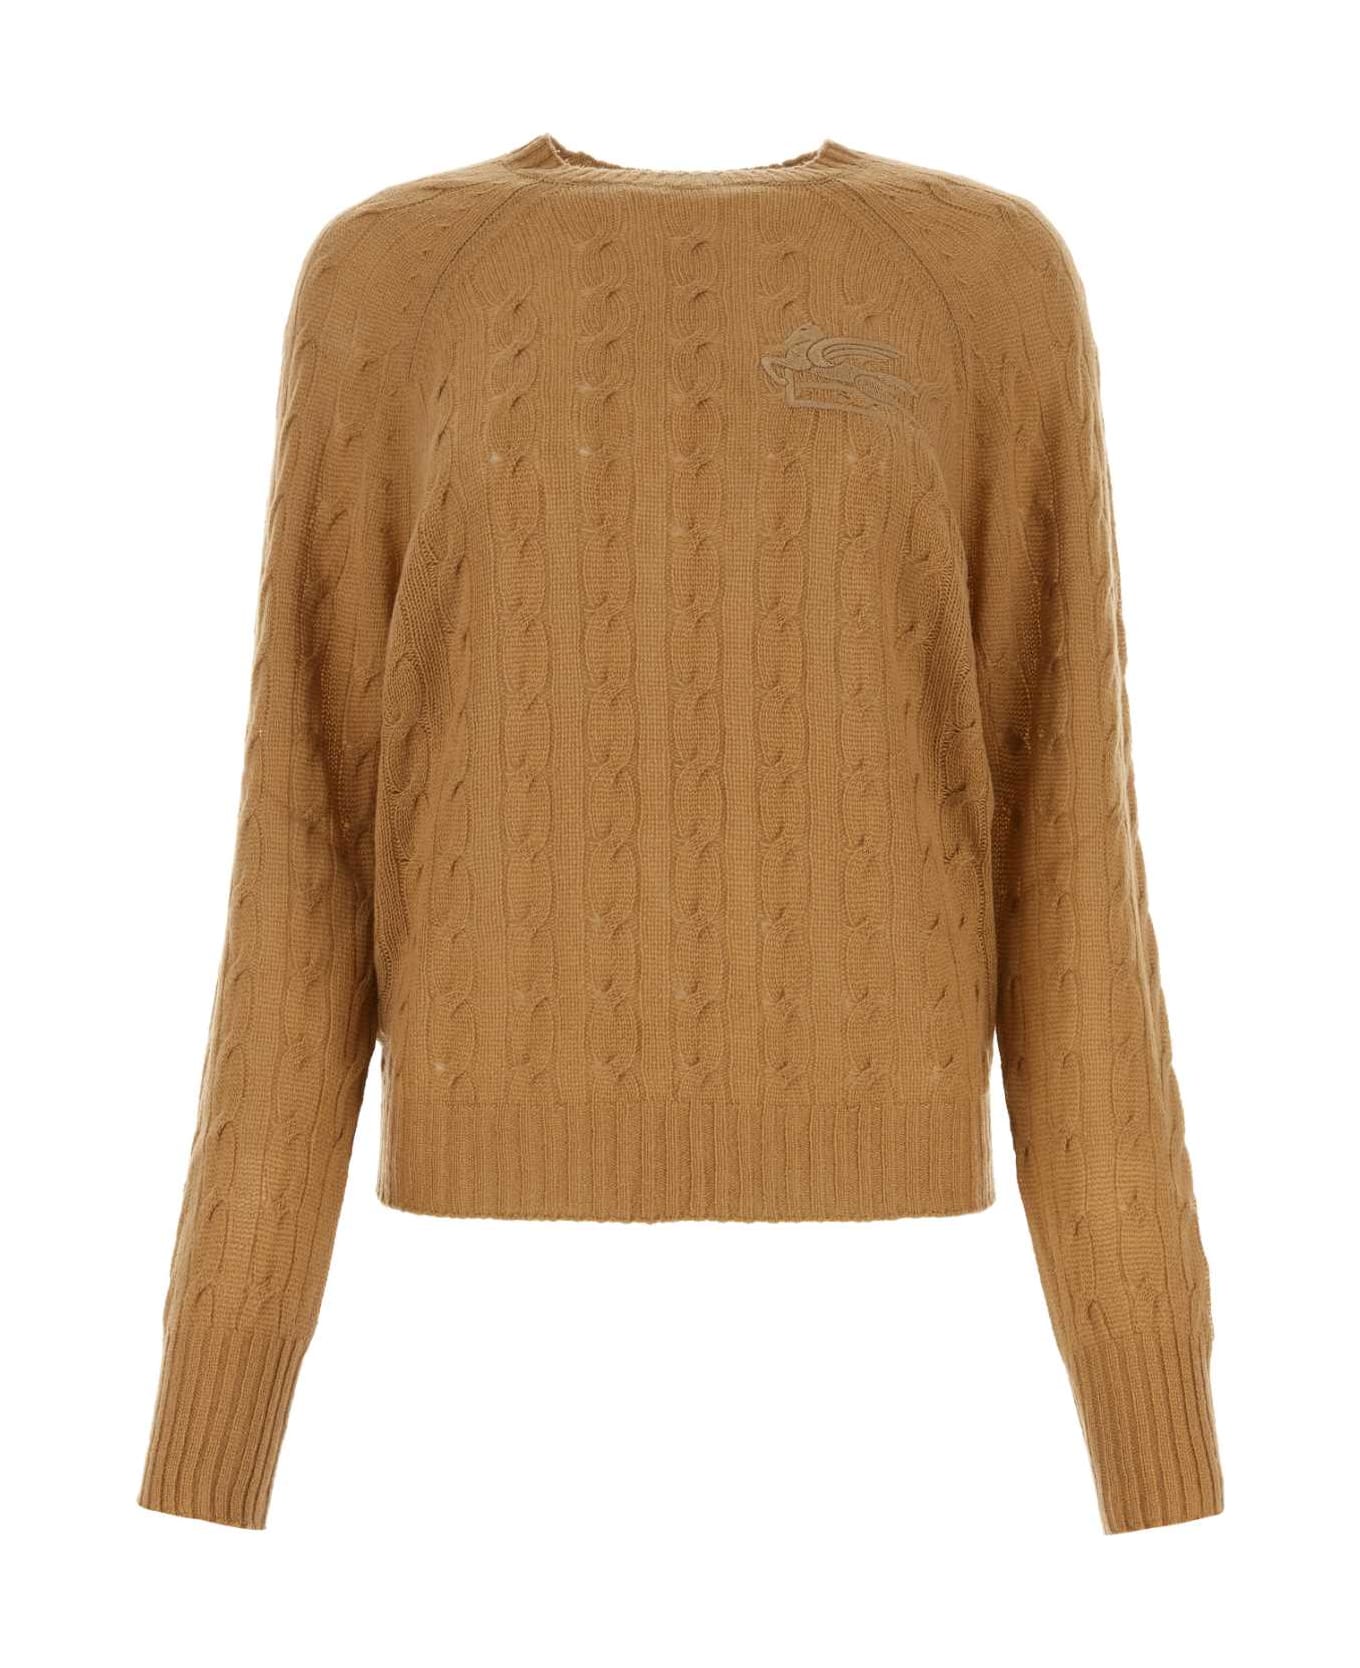 Etro Camel Cashmere Sweater - BEIGE ニットウェア